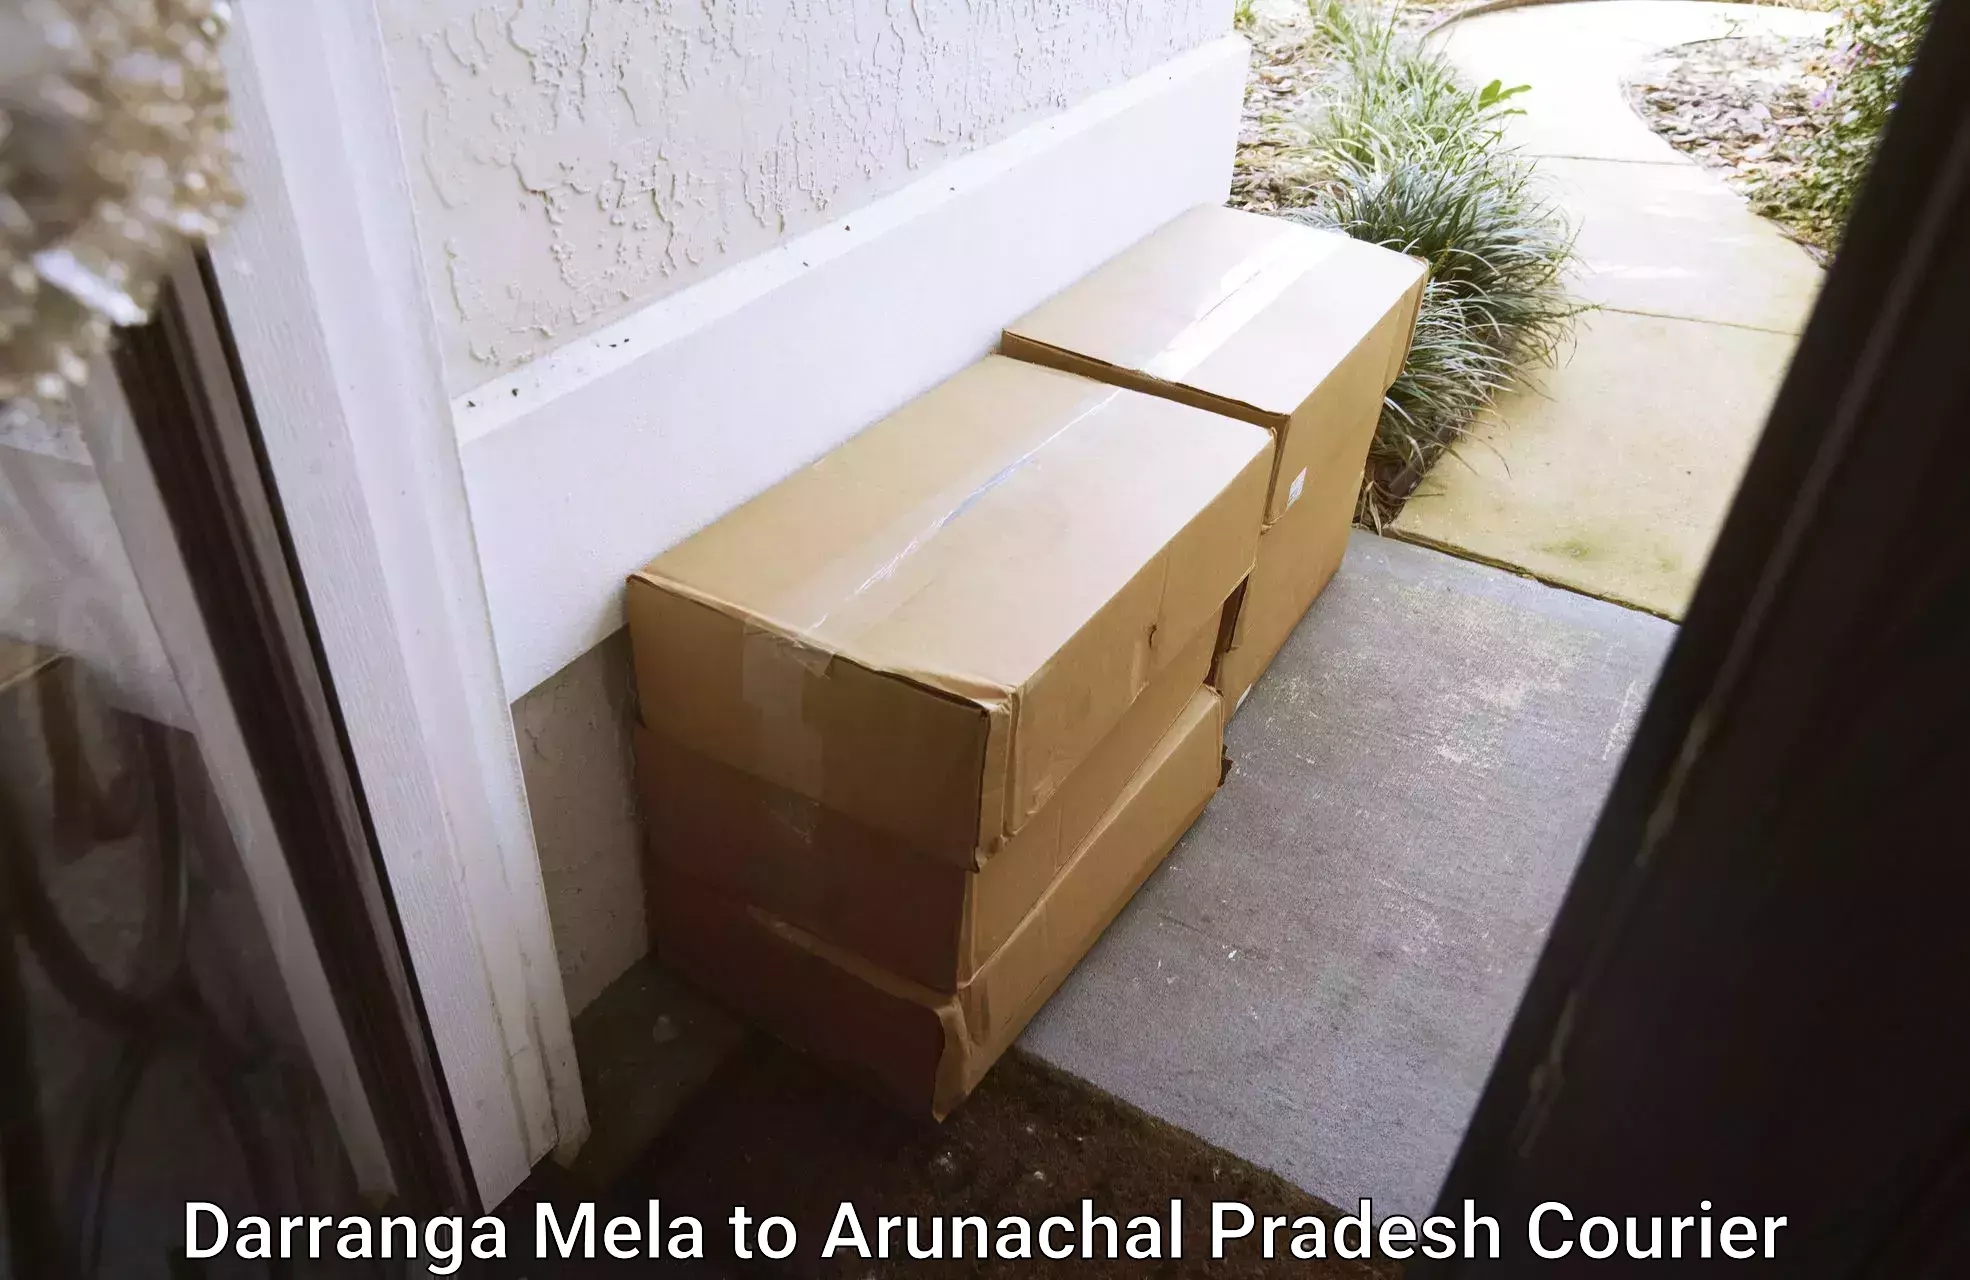 High-priority parcel service in Darranga Mela to East Kameng